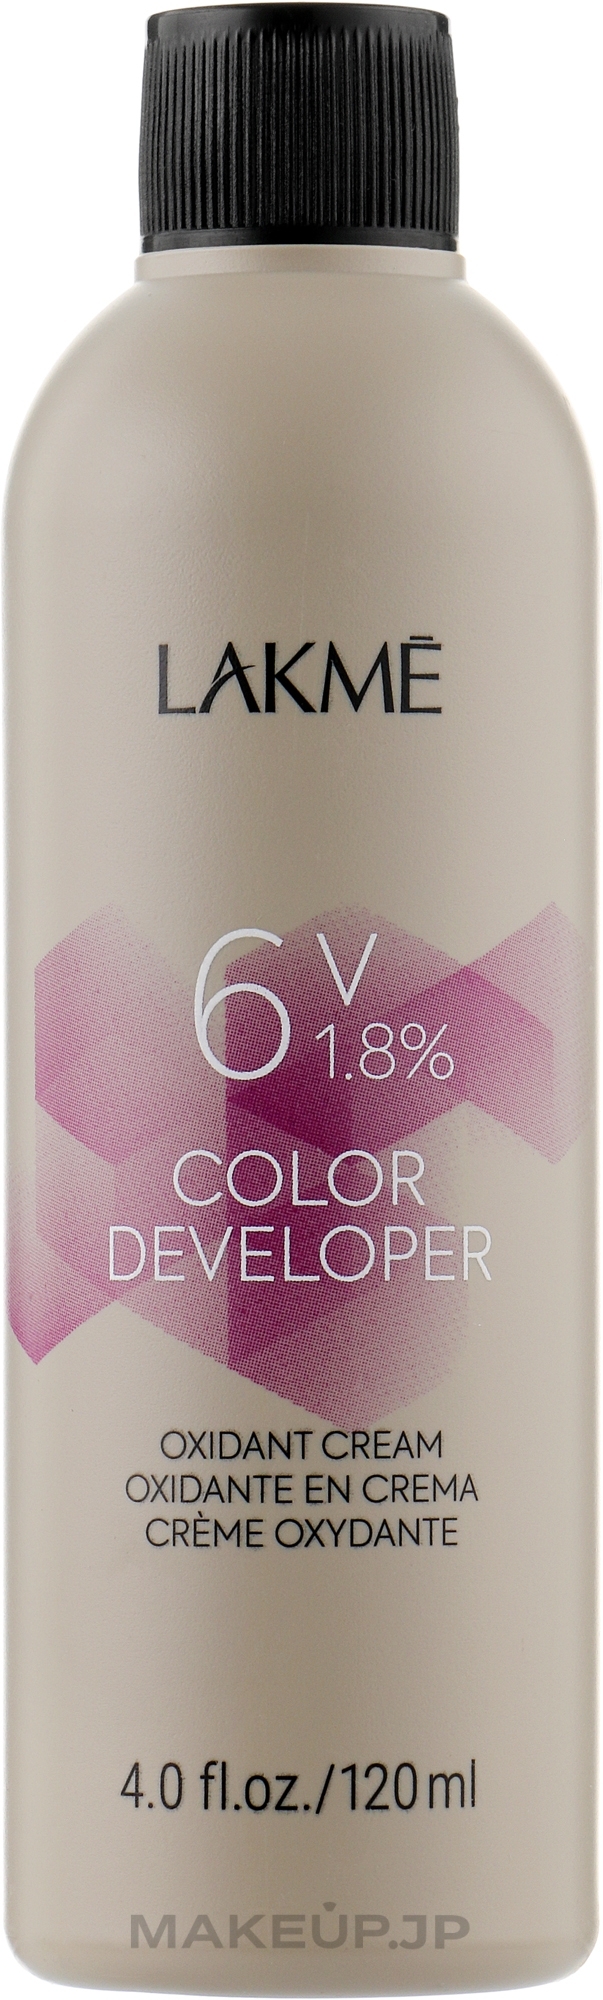 Oxidizing Cream - Lakme Color Developer 6V (1,8%) — photo 120 ml